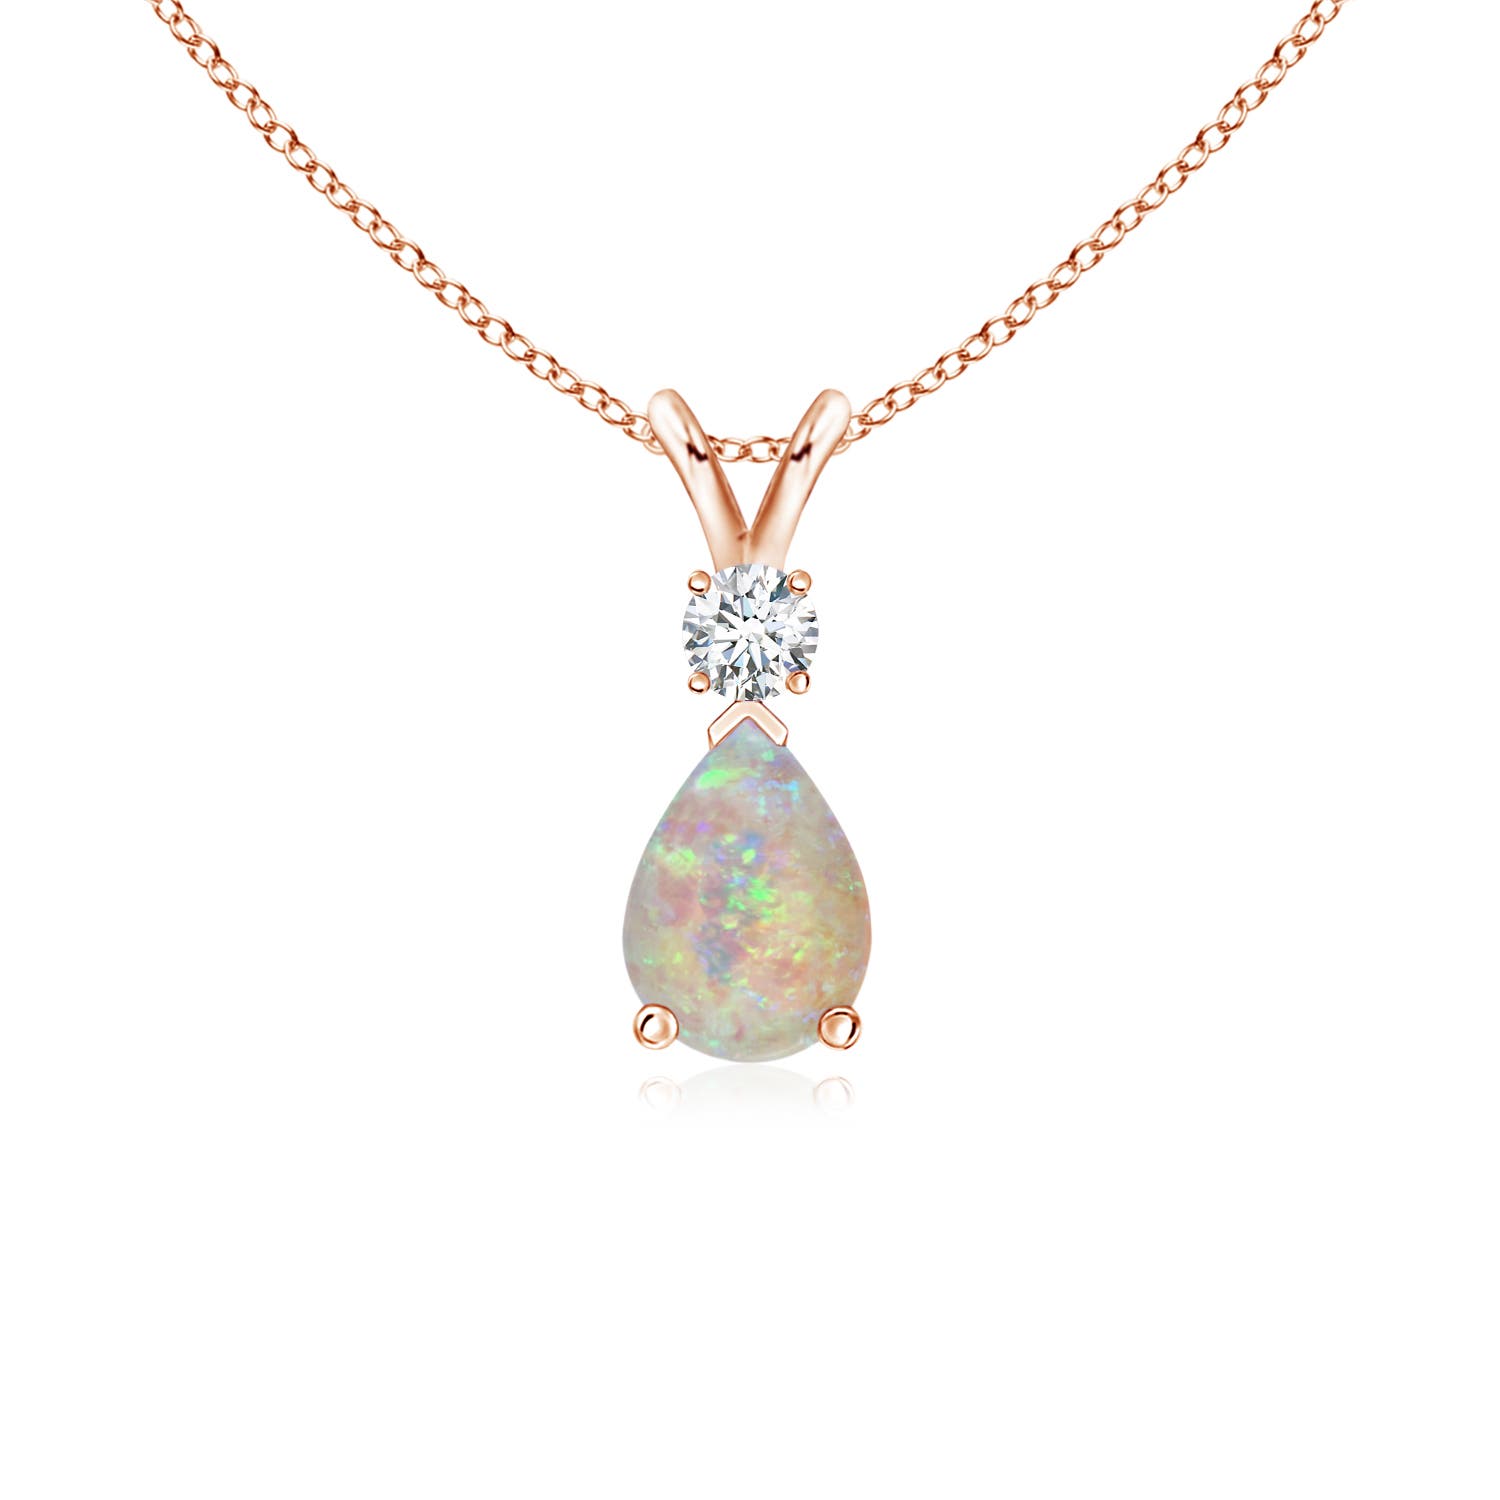 14 K Solid Gold Opal & Diamond Stones Pendant Necklace - directcreate.com